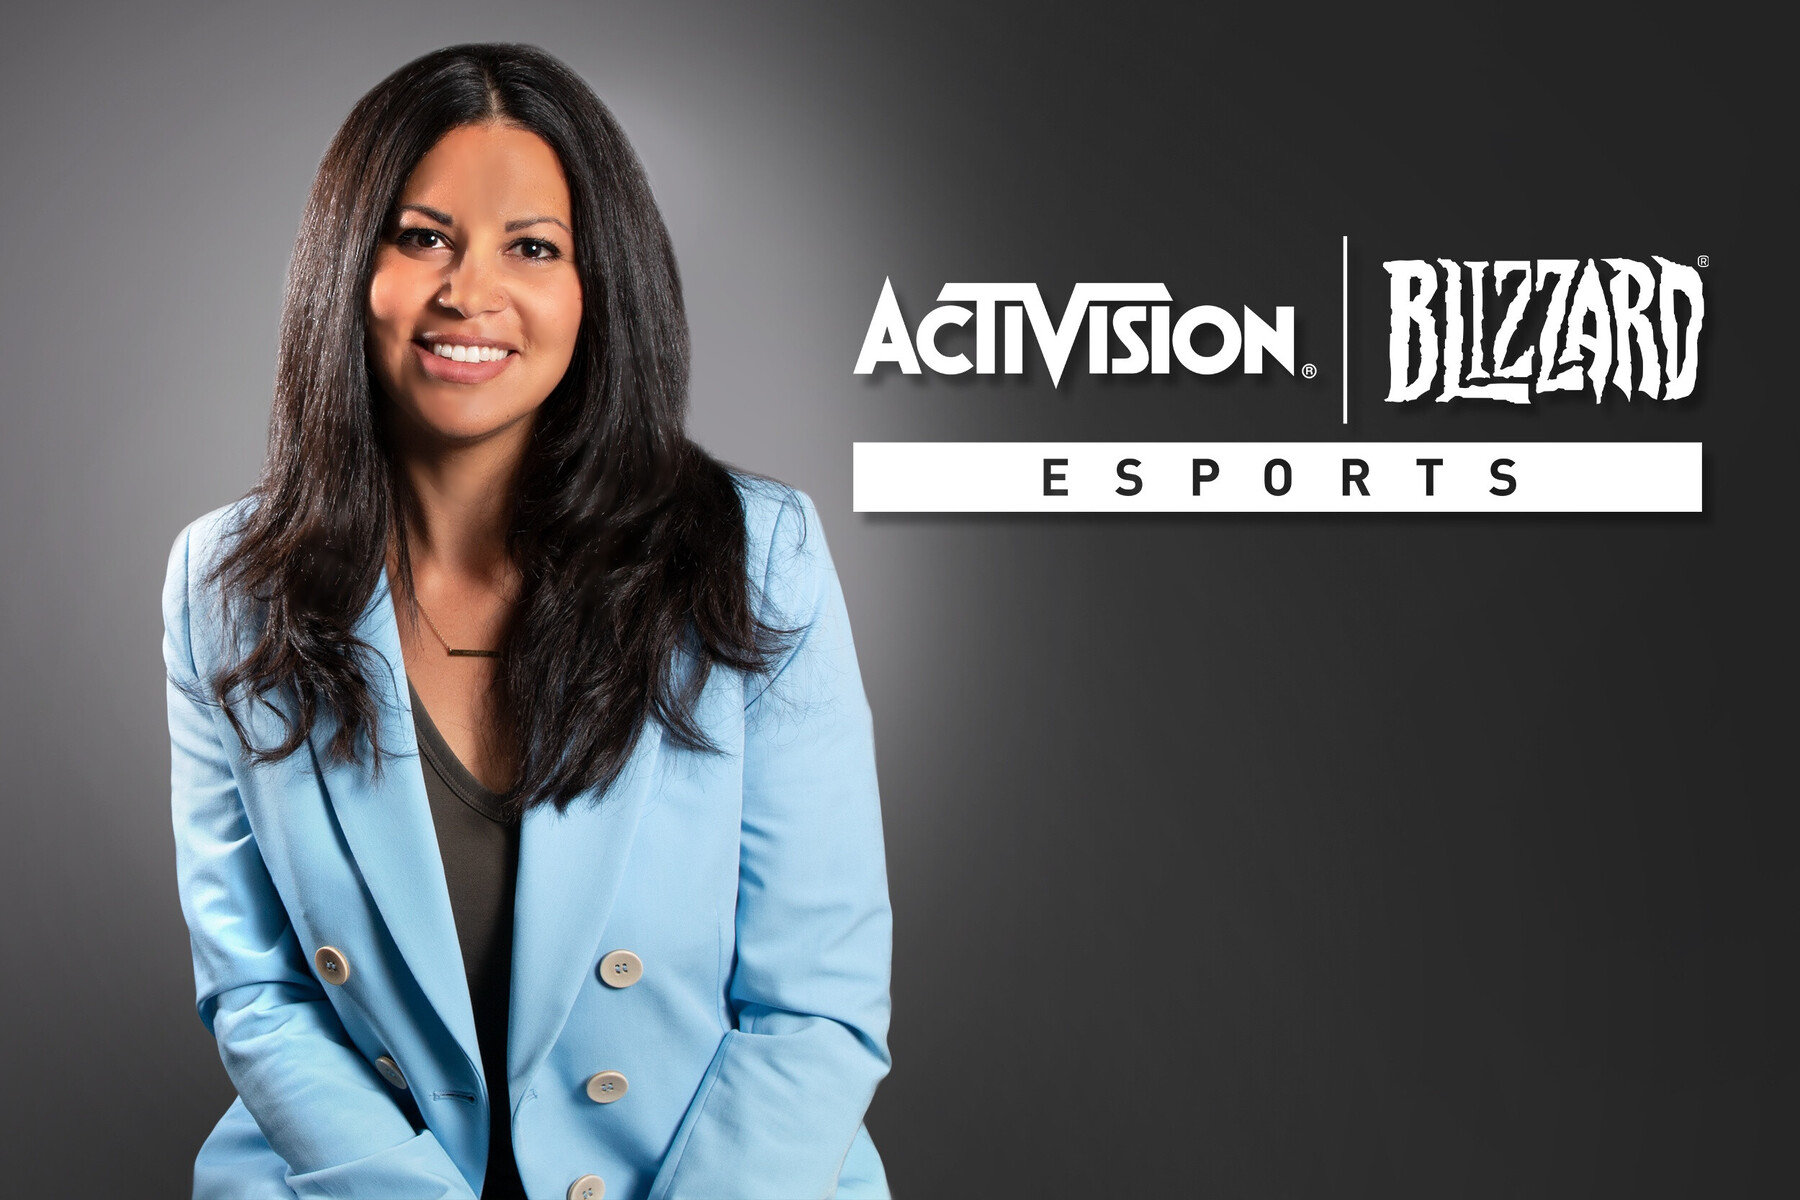 Johanna Faries es la nueva presidenta de Blizzard Entertainment